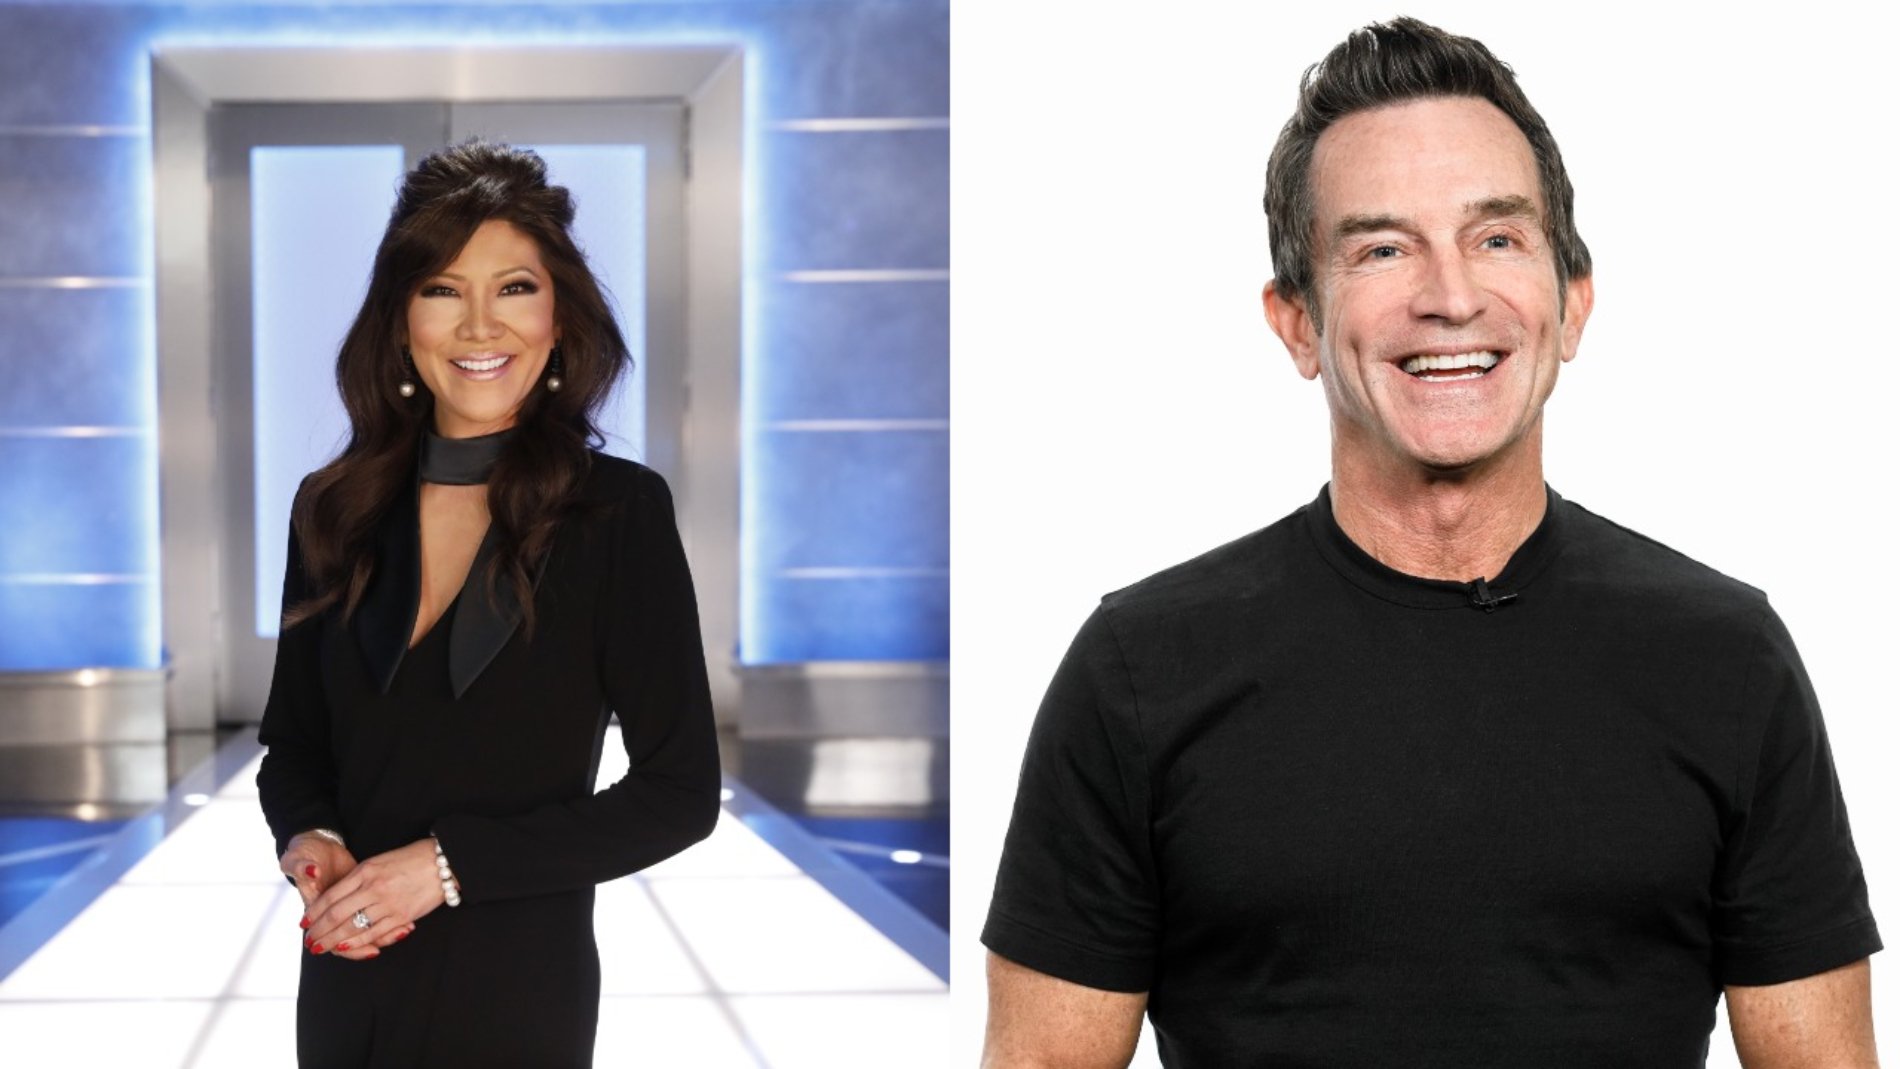 Does ‘Big Brother’ Host Julie Chen Moonves or ‘Survivor’ Host Jeff Probst Have a Higher Net Worth?